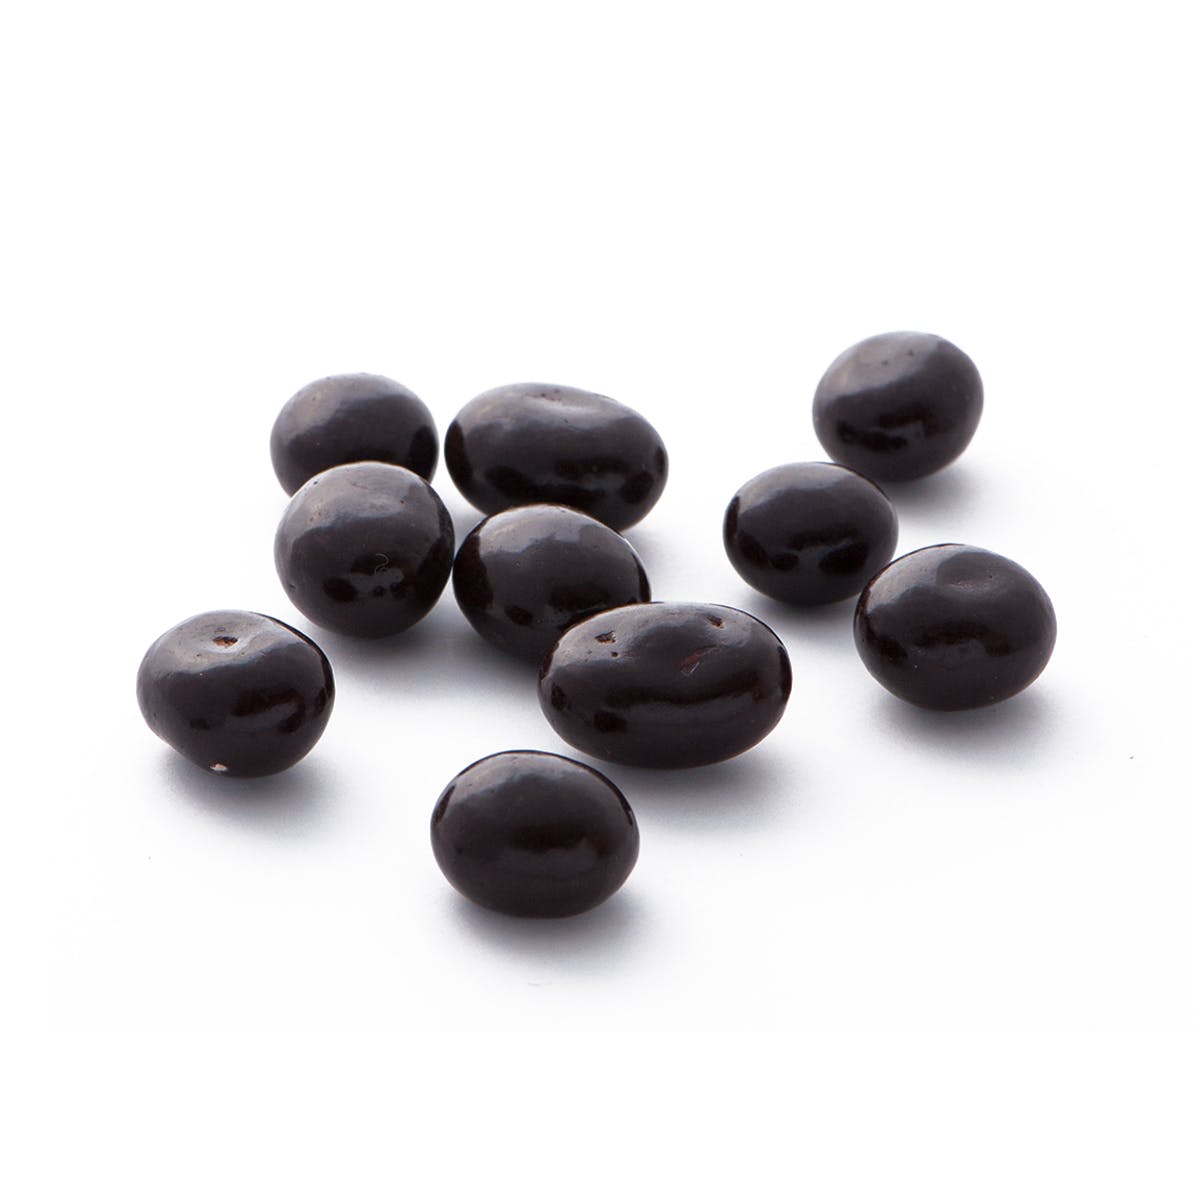 edible-sweet-jane-edibles-espresso-bean-clusters-2c-150mg